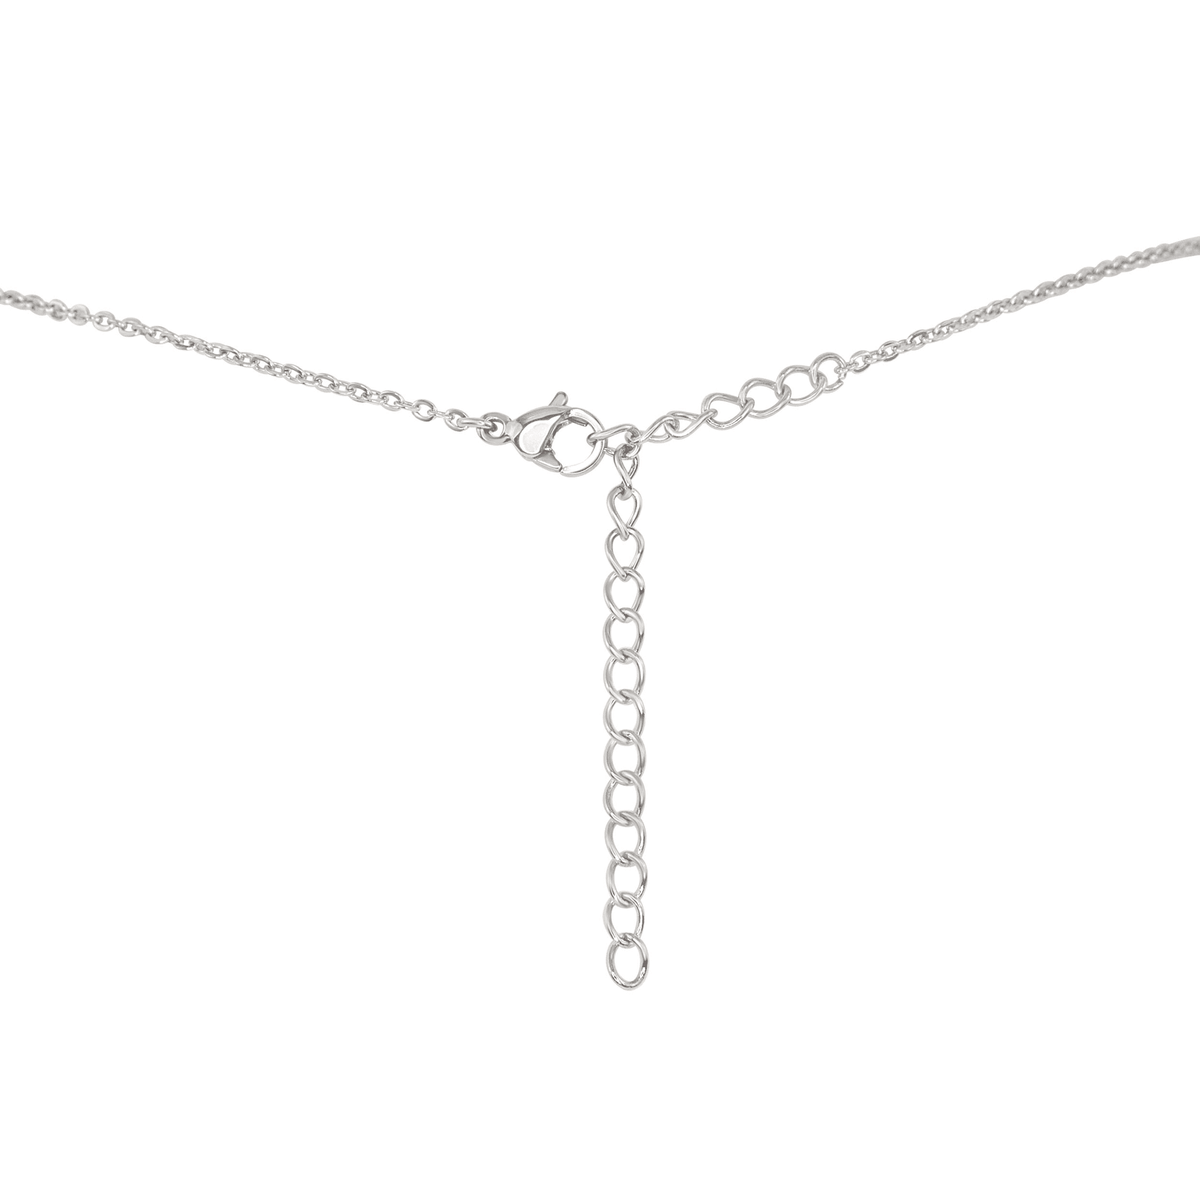 Aquamarine Chip Bead Bar Necklace - Aquamarine Chip Bead Bar Necklace - 14k Gold Fill - Luna Tide Handmade Crystal Jewellery